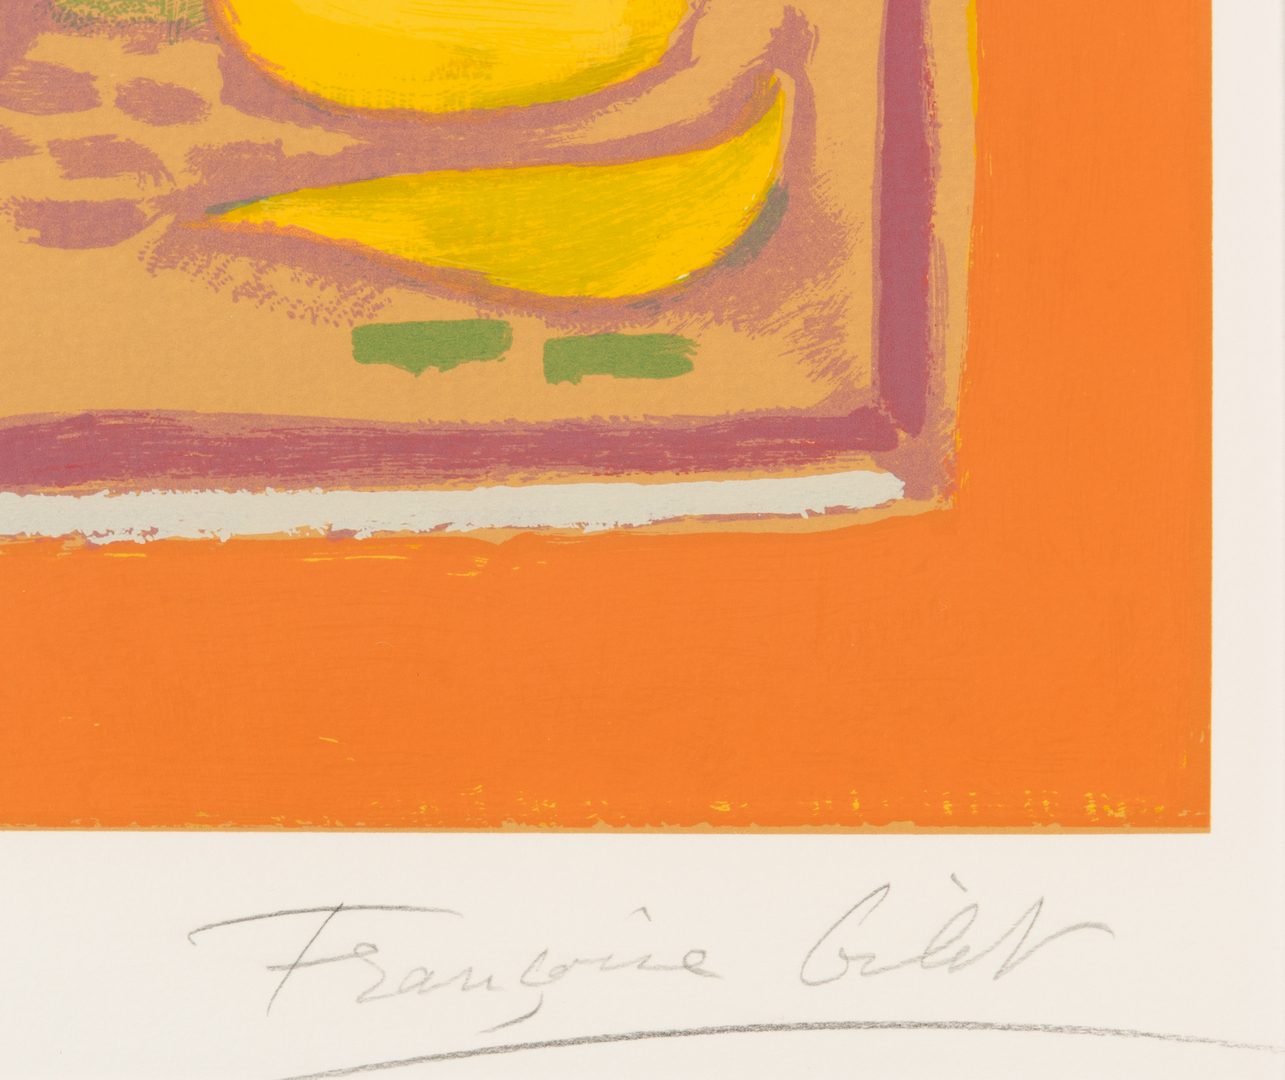 Lot 211: Francoise Gilot "Still Life" Lithograph, Signed